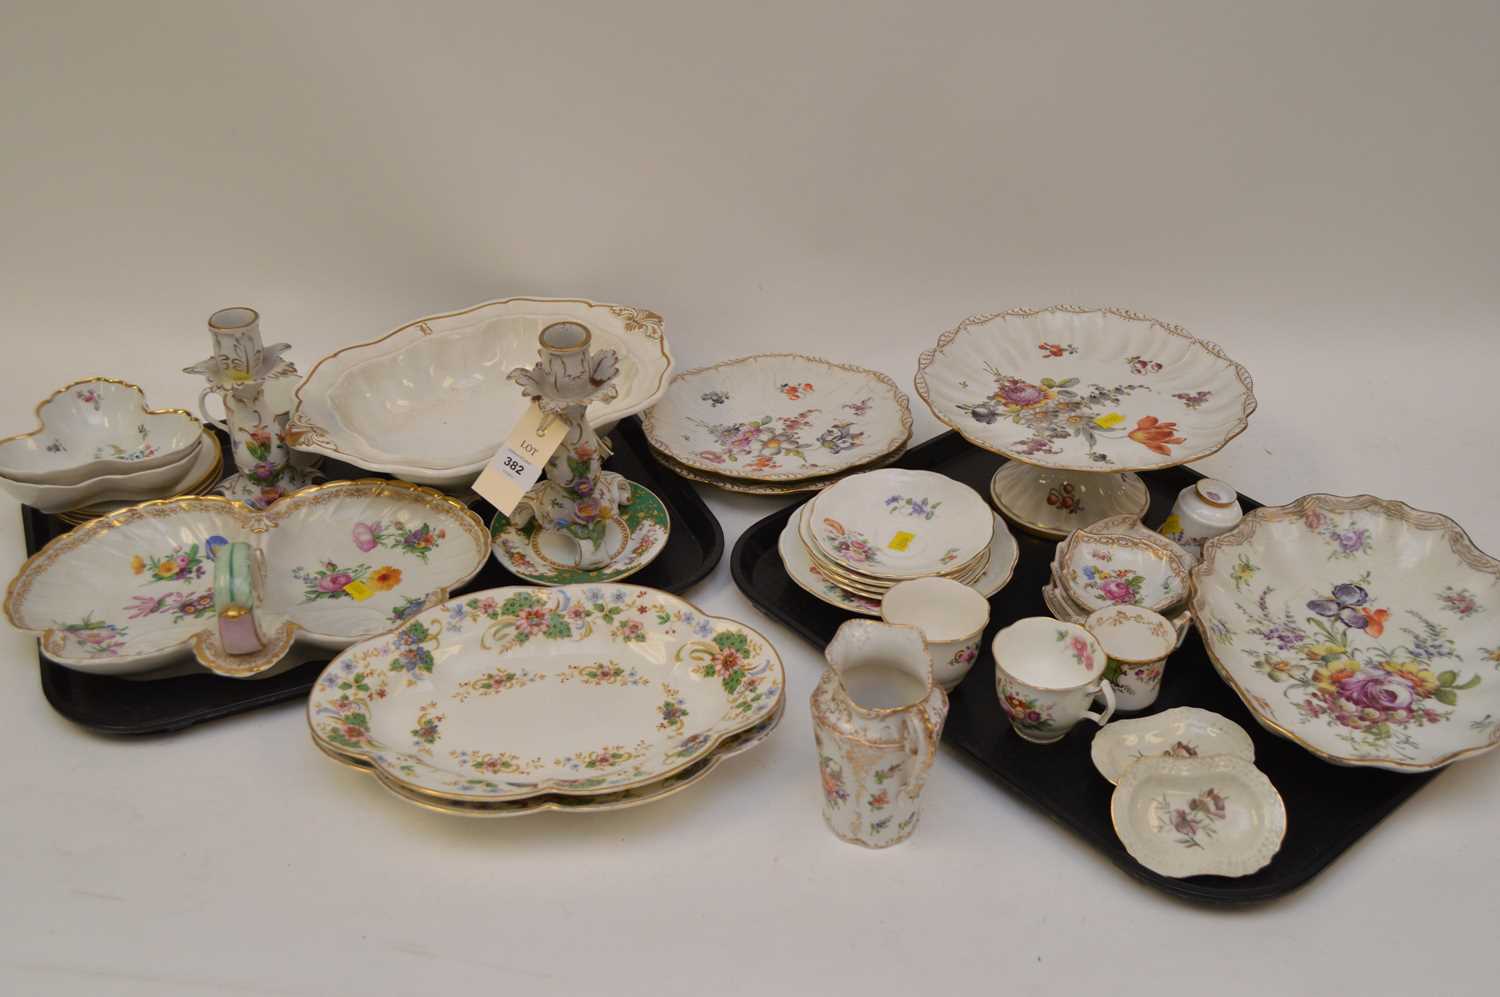 Lot 382 - Miscellaneous ceramic items.